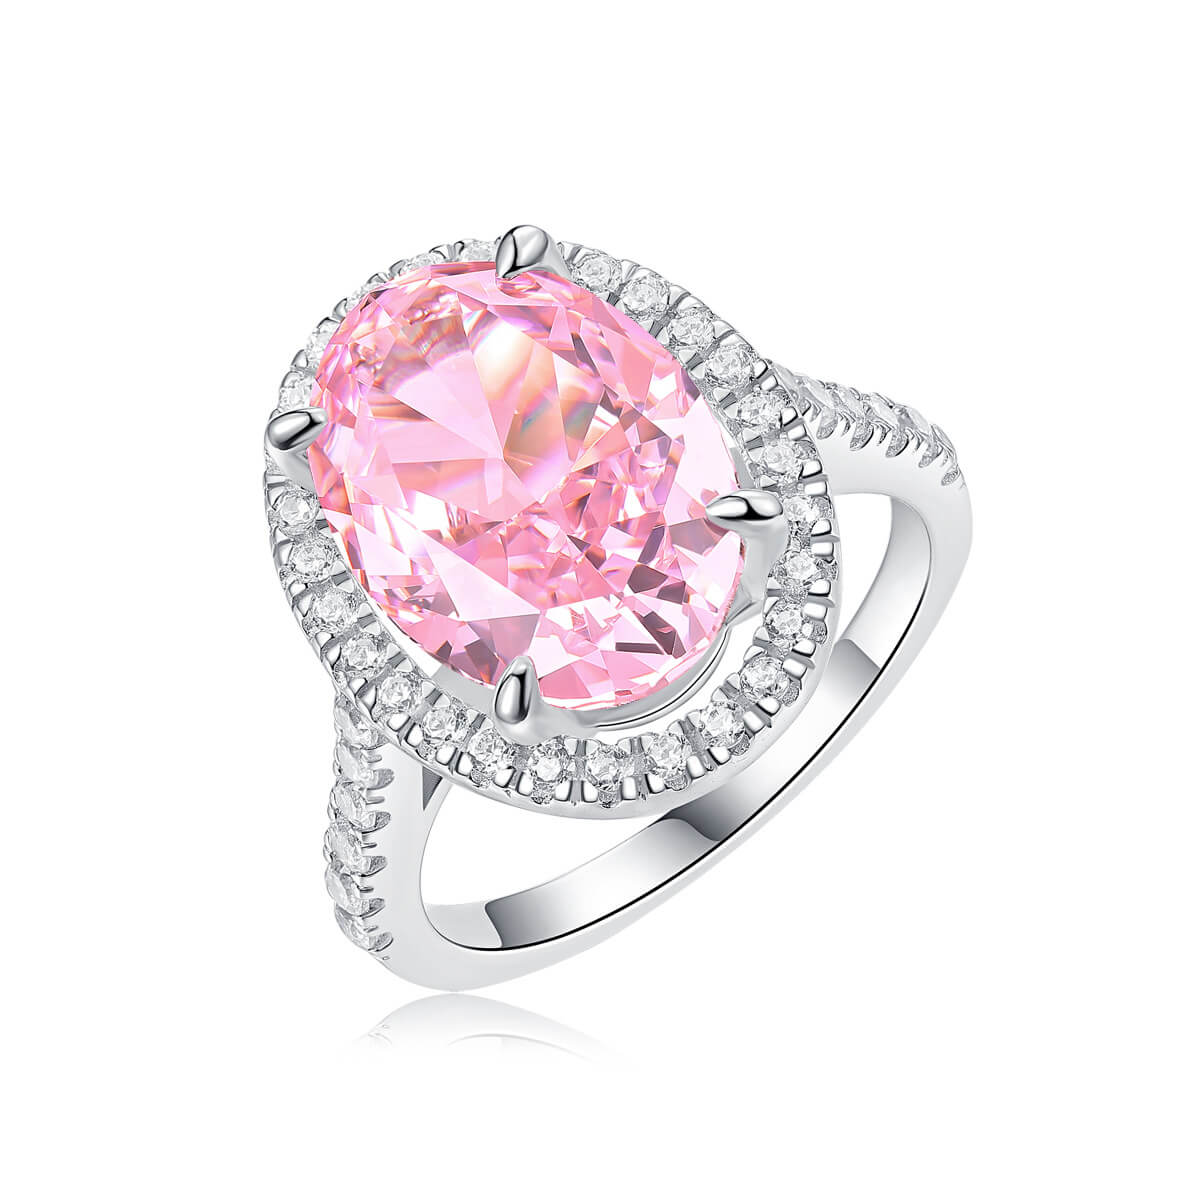 S925 Peach Pink High Carbon Diamond Ring